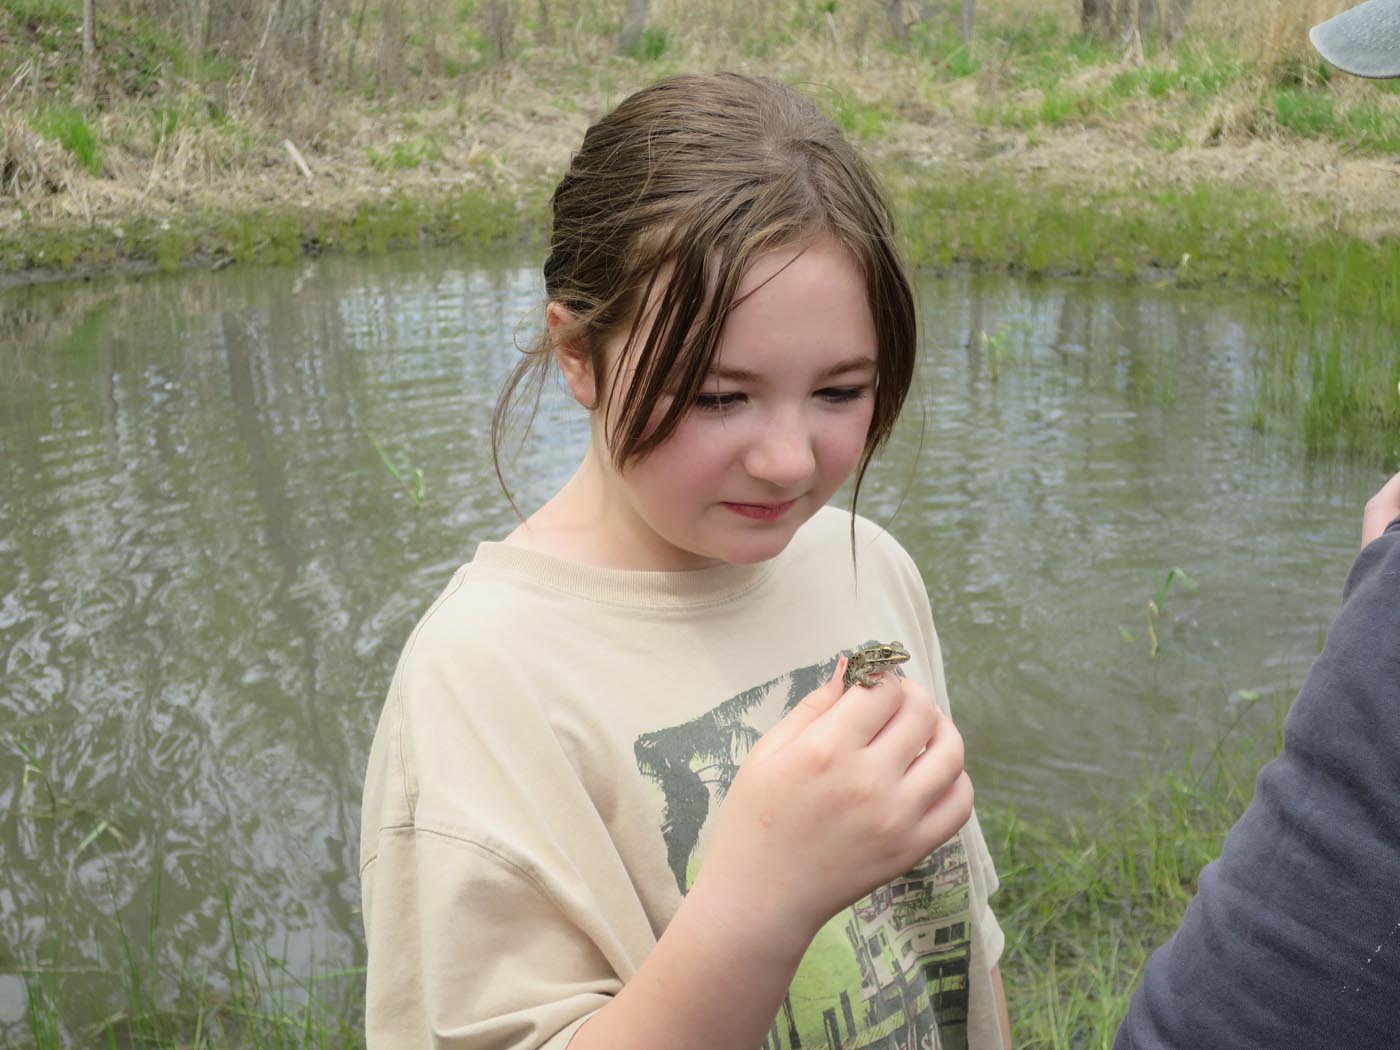 USA Illinois Meredosia National Wildlife Refuge Save The Frogs Day Wetlands